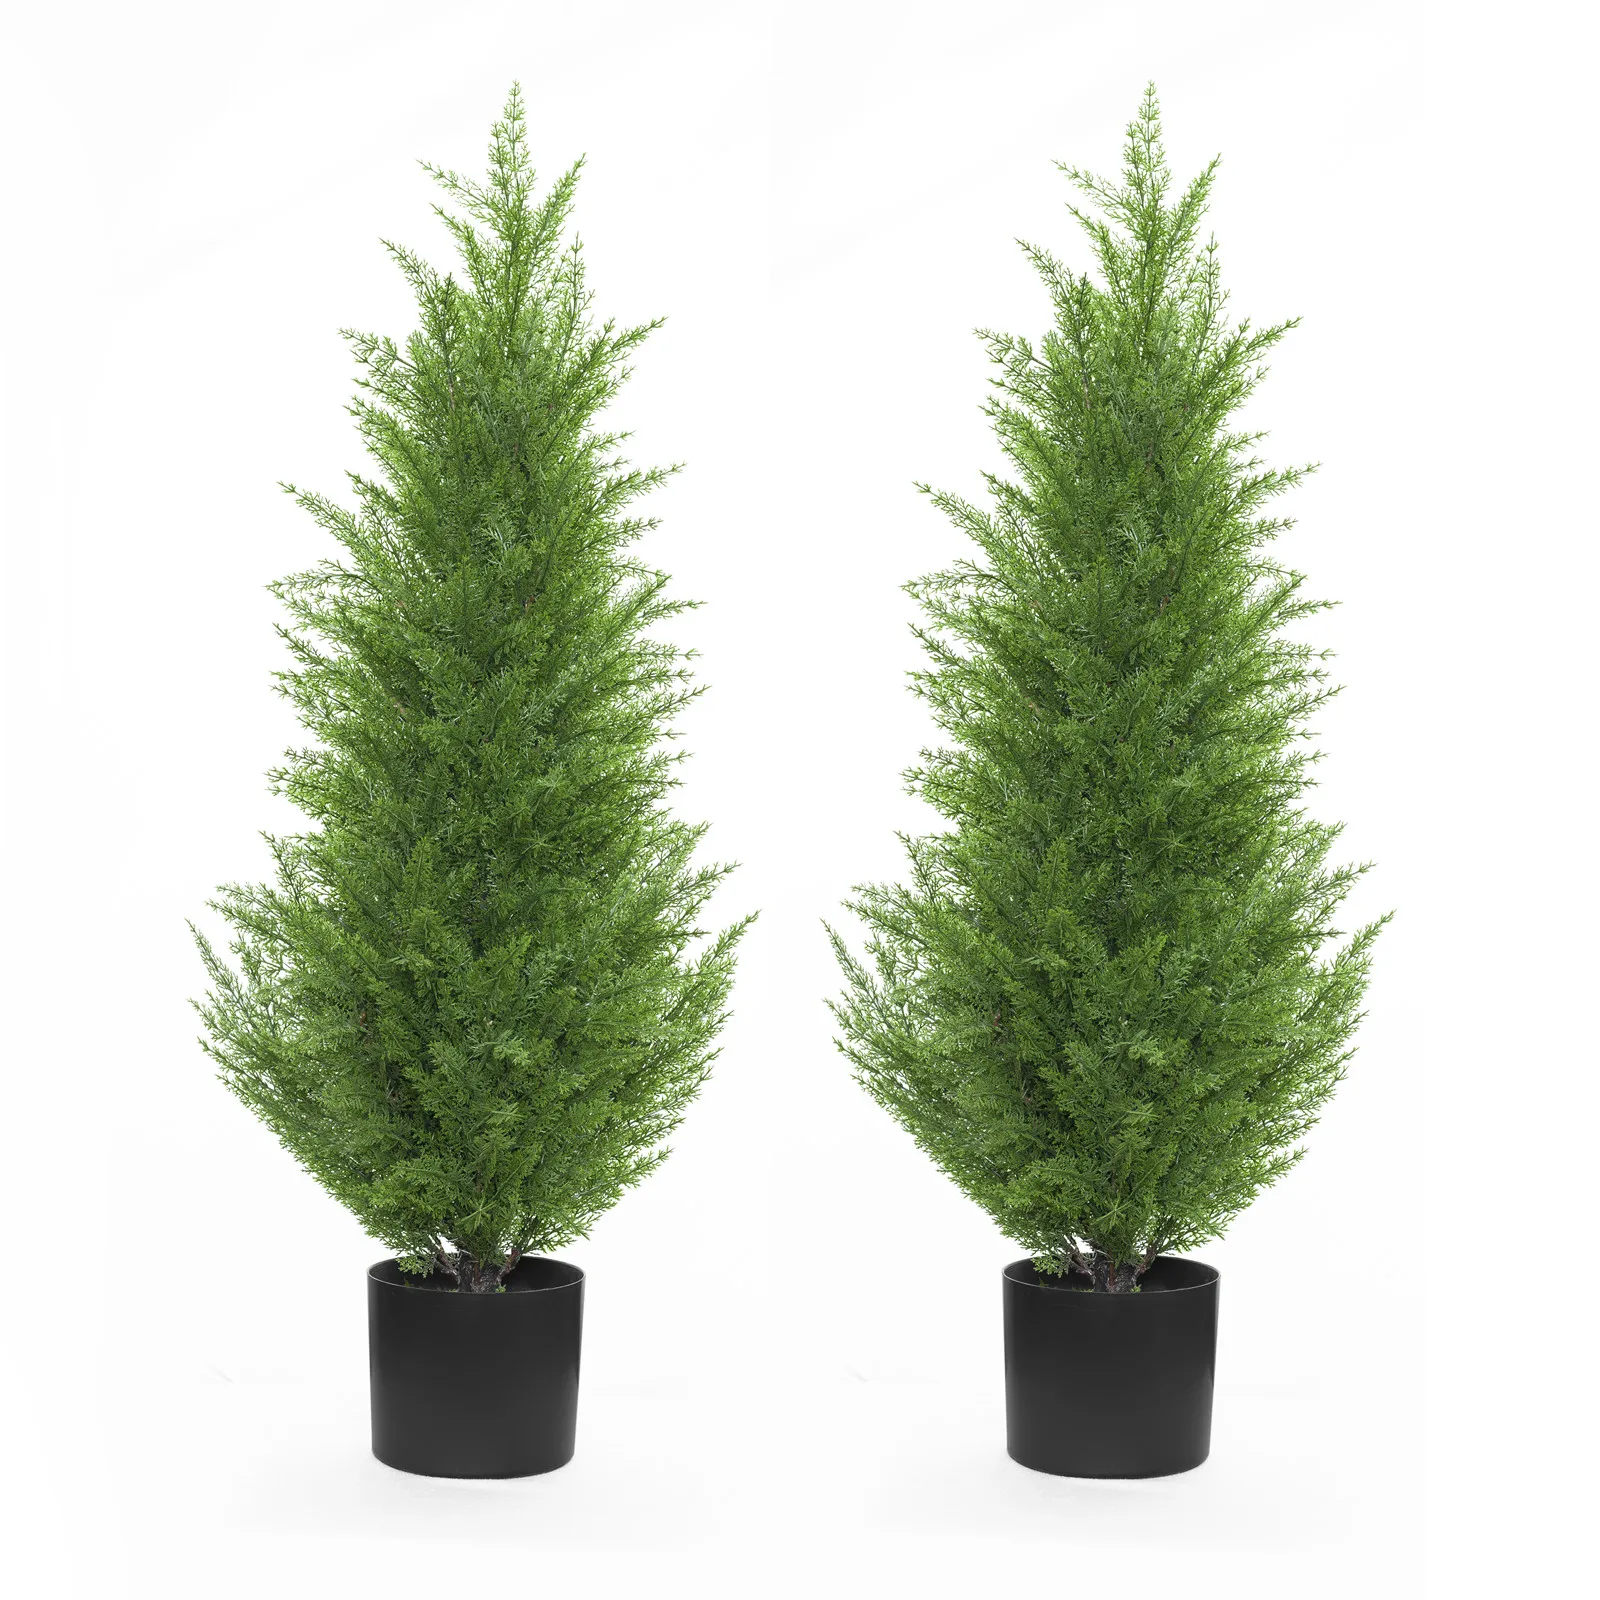 

5 foot factory hot sale artificial pine tree /Artificial cedar tree / decorative Christmas tree, Green color